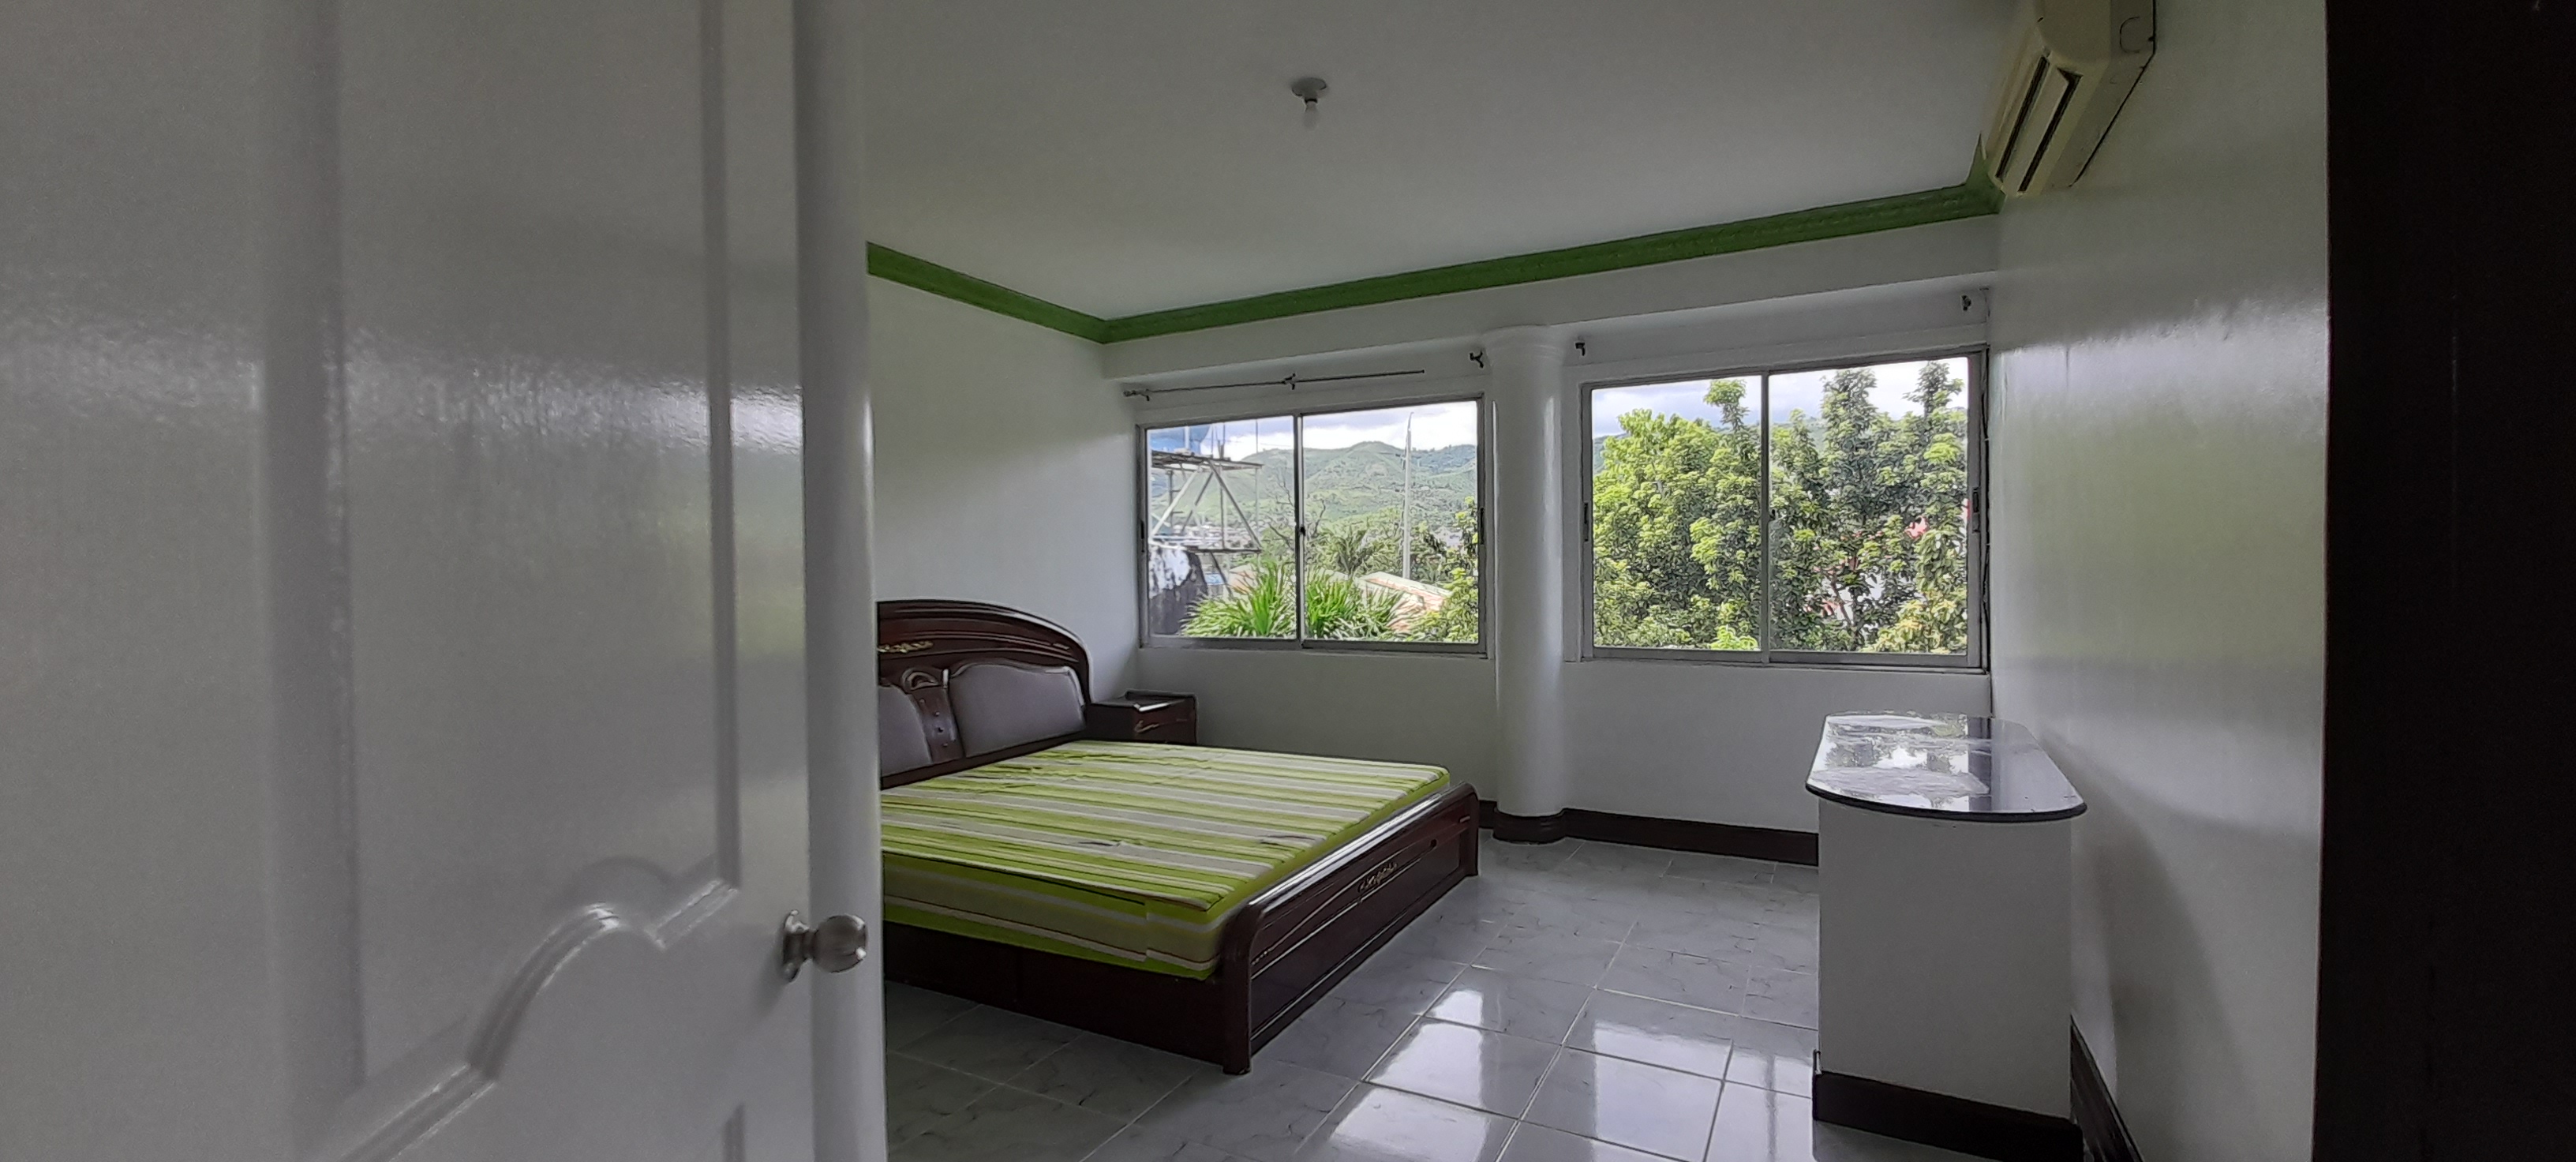 2-bedroom-furnished-apartment-for-rent-in-banawa-cebu-city-near-mcdonald